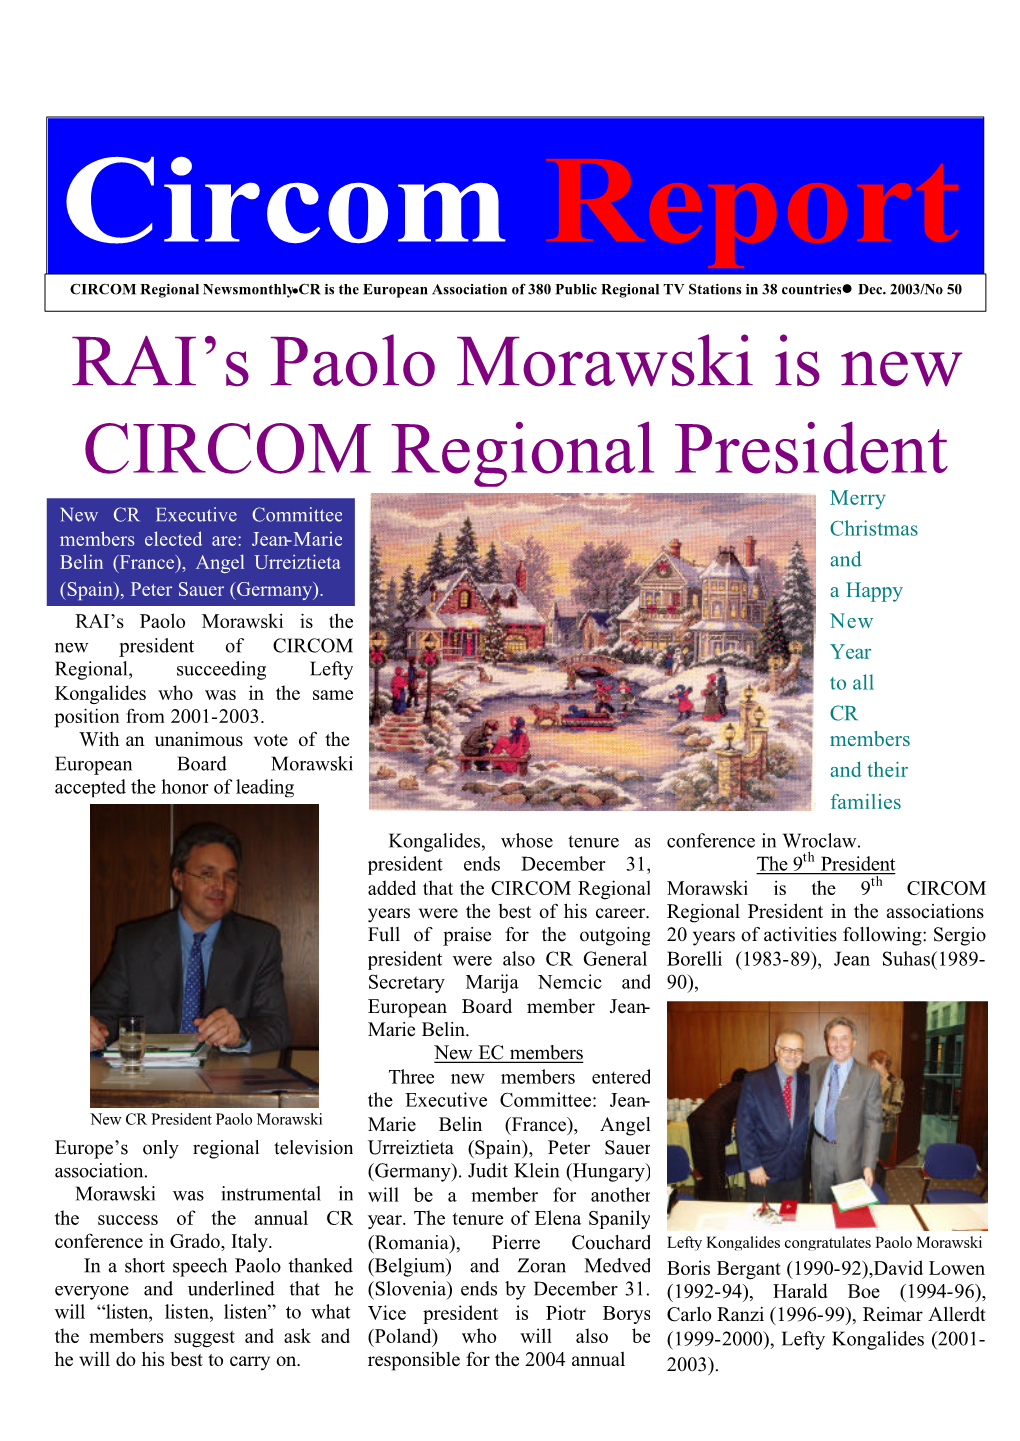 RAI's Paolo Morawski Is New CIRCOM Regional President